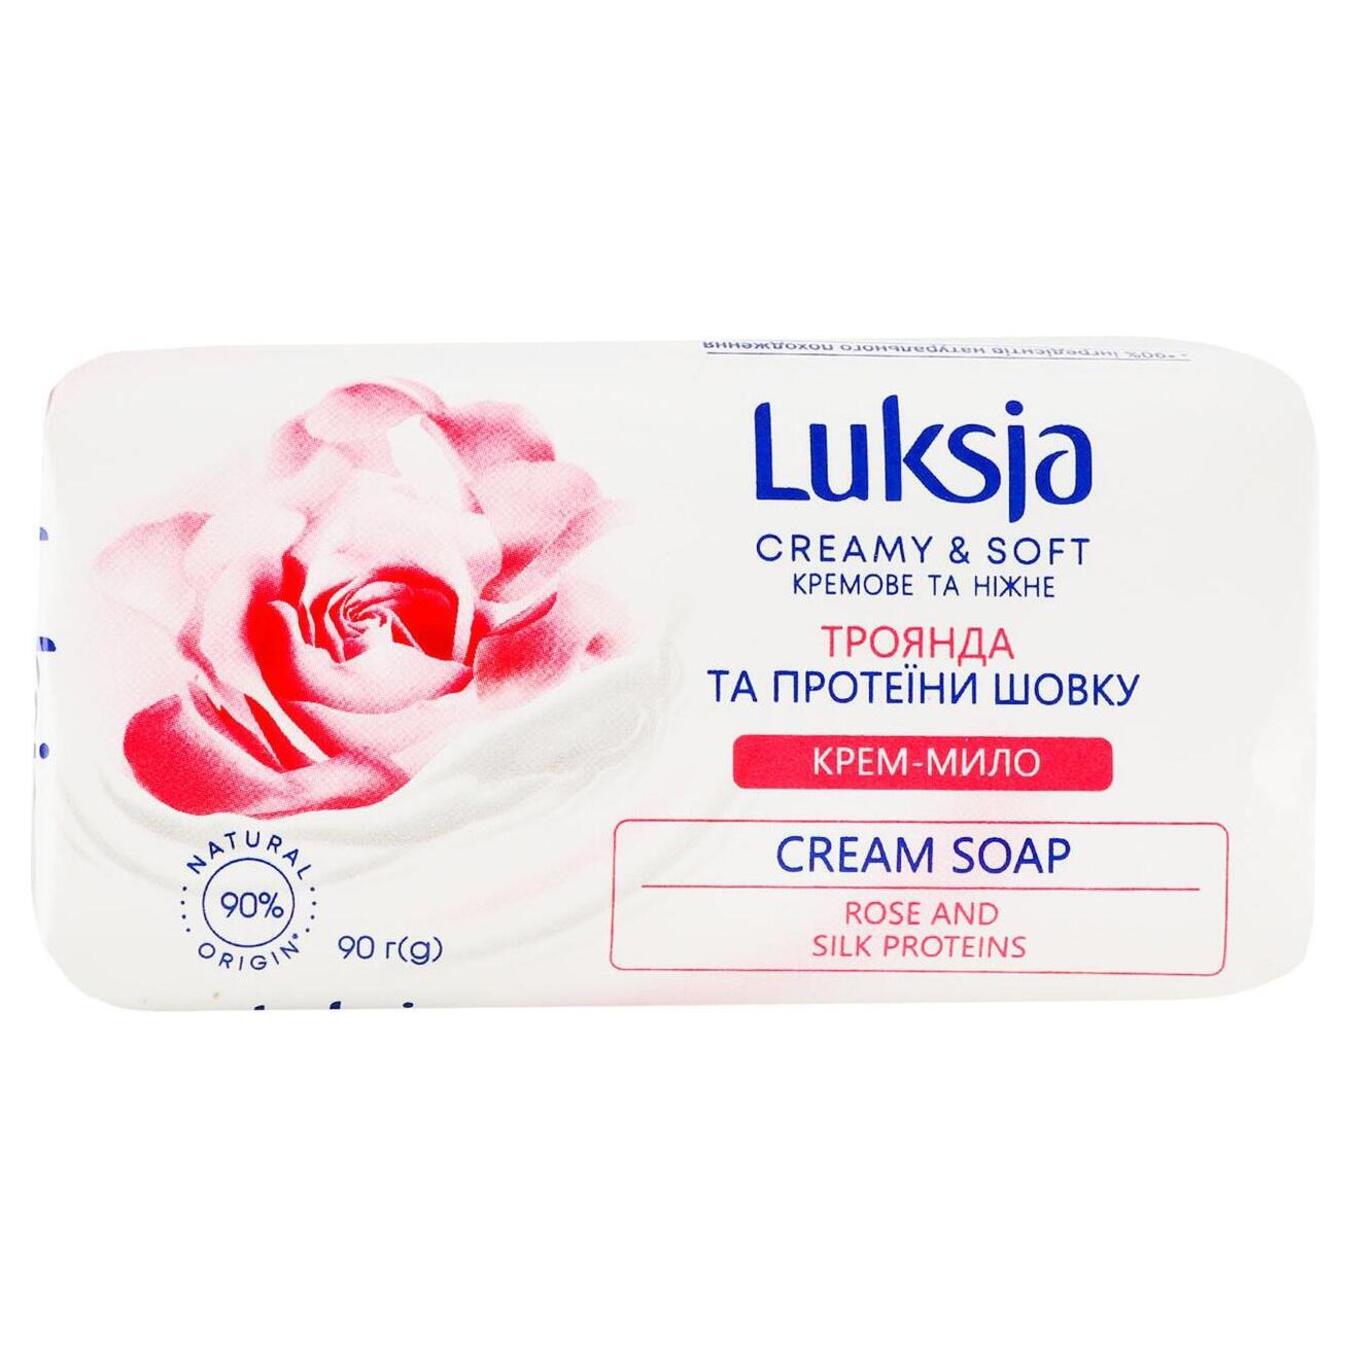 Cream-soap solid rose + silk protein Luksja 90g